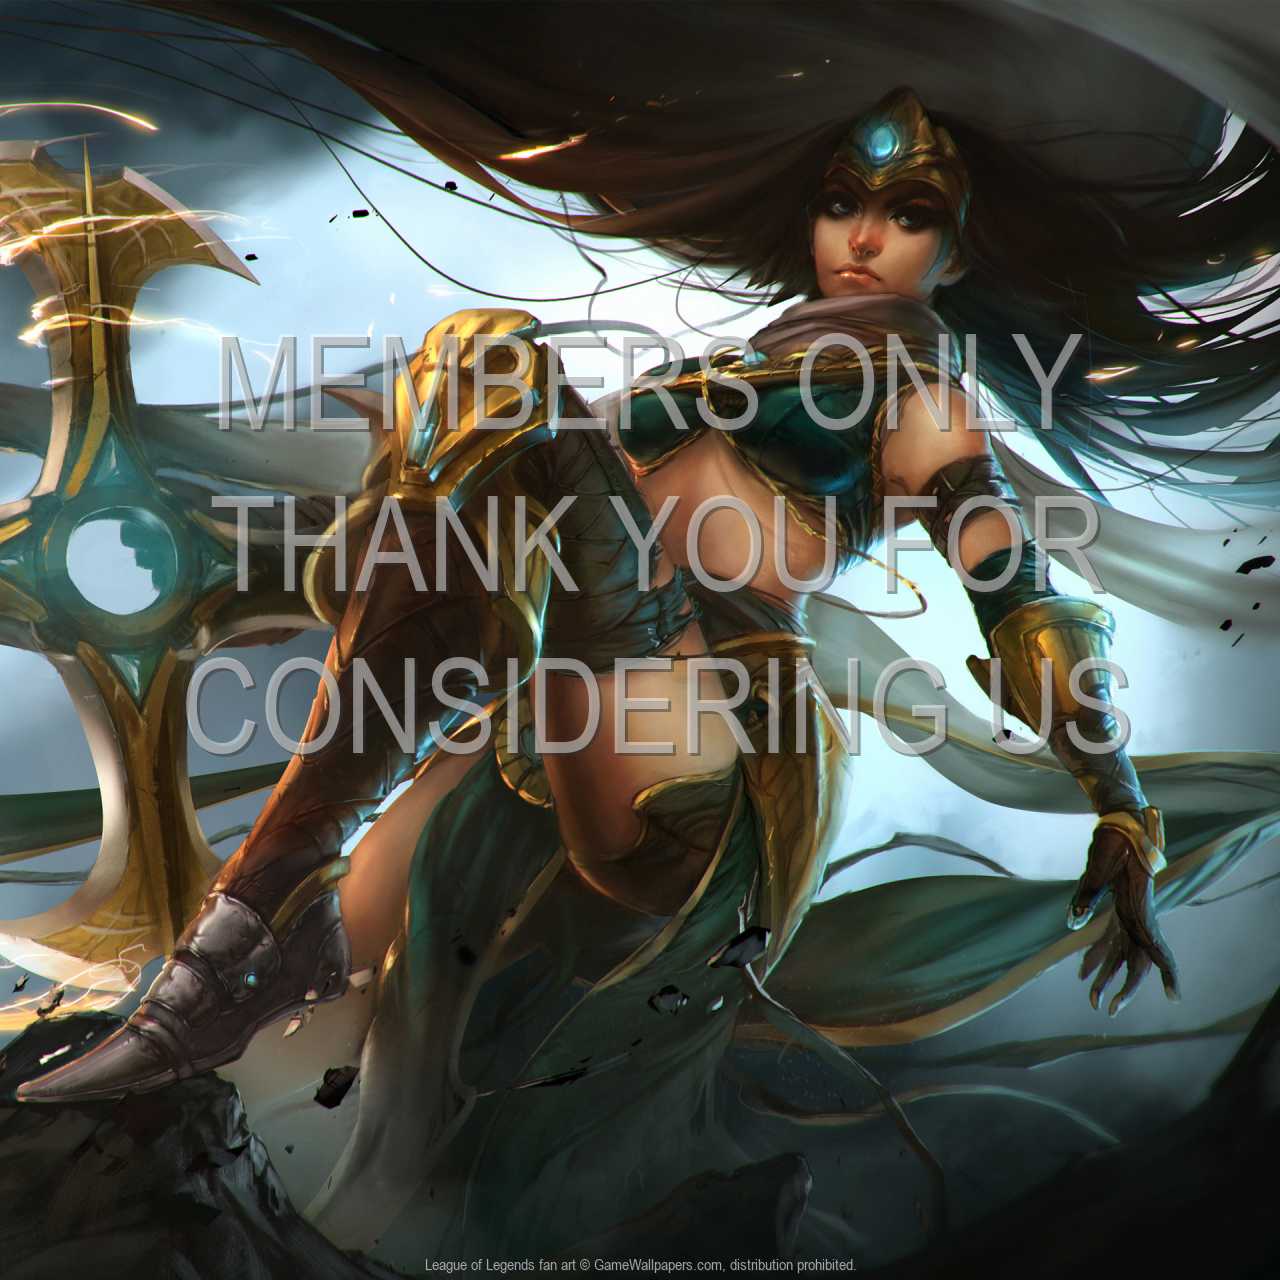 League of Legends fan art 720p%20Horizontal Mobile wallpaper or background 04